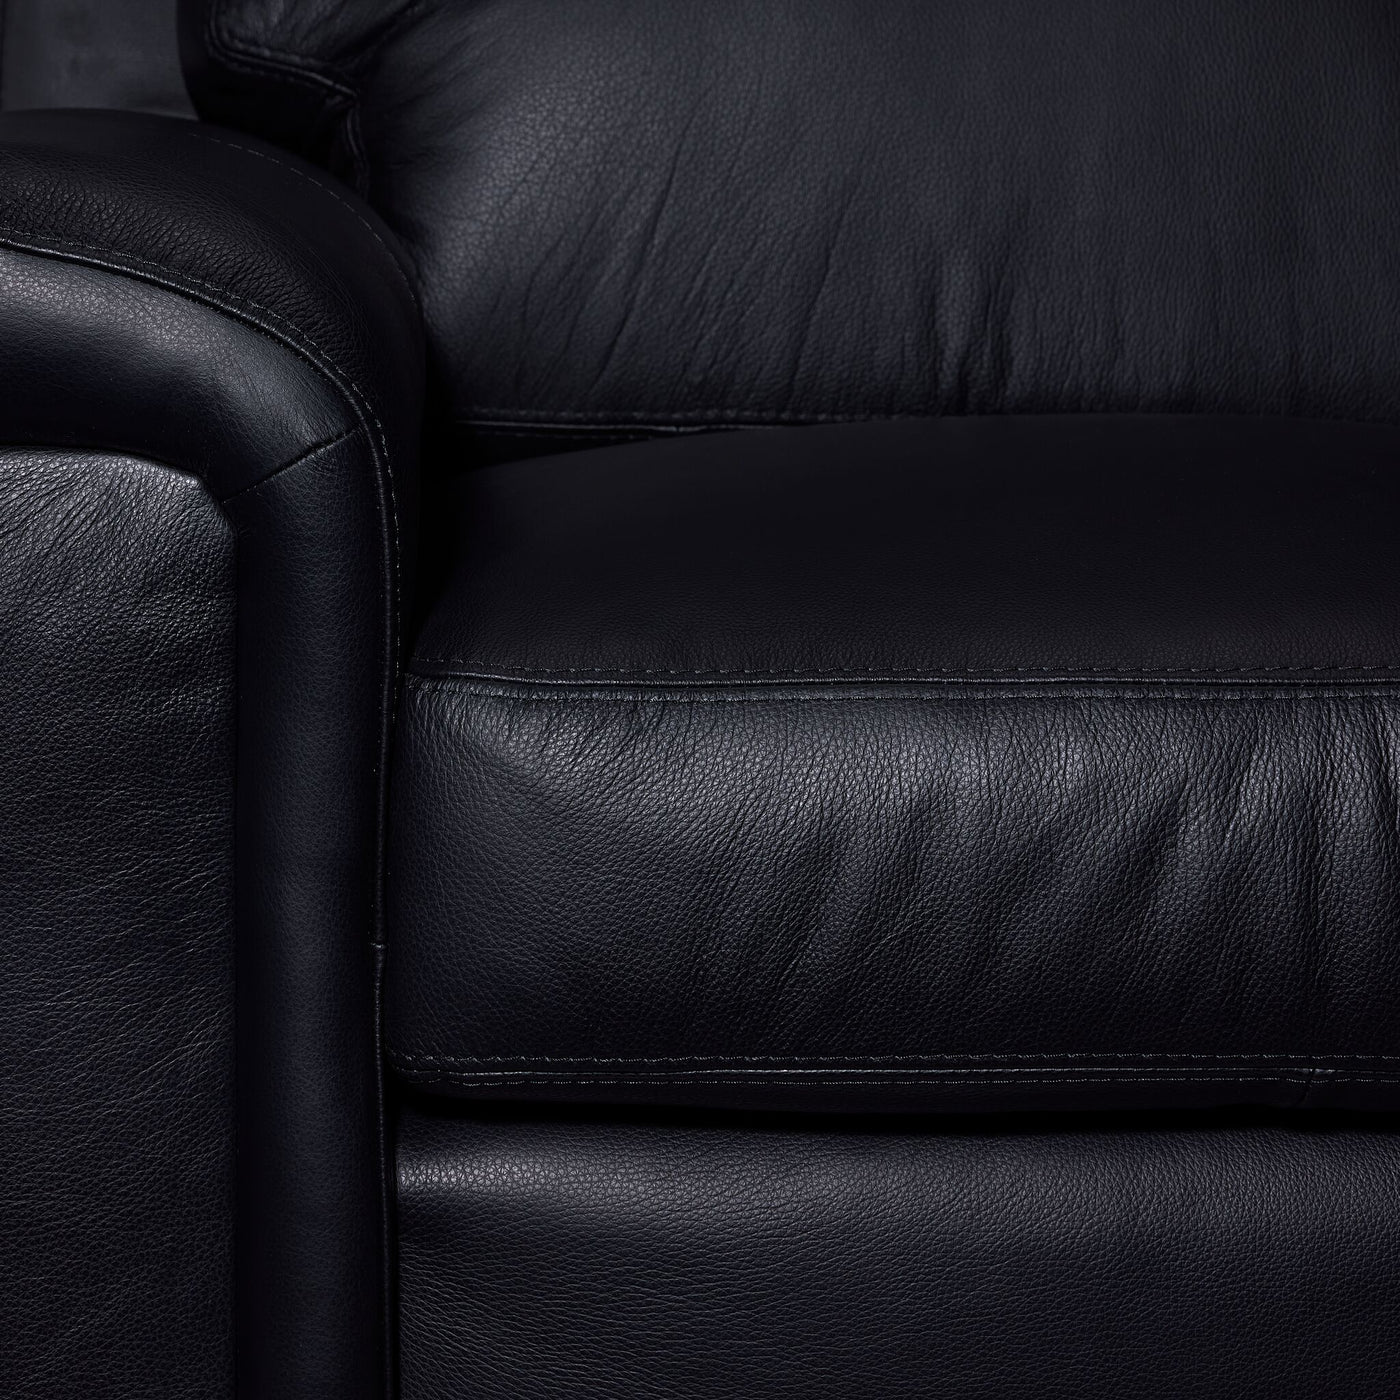 Icon Leather Sofa - Black